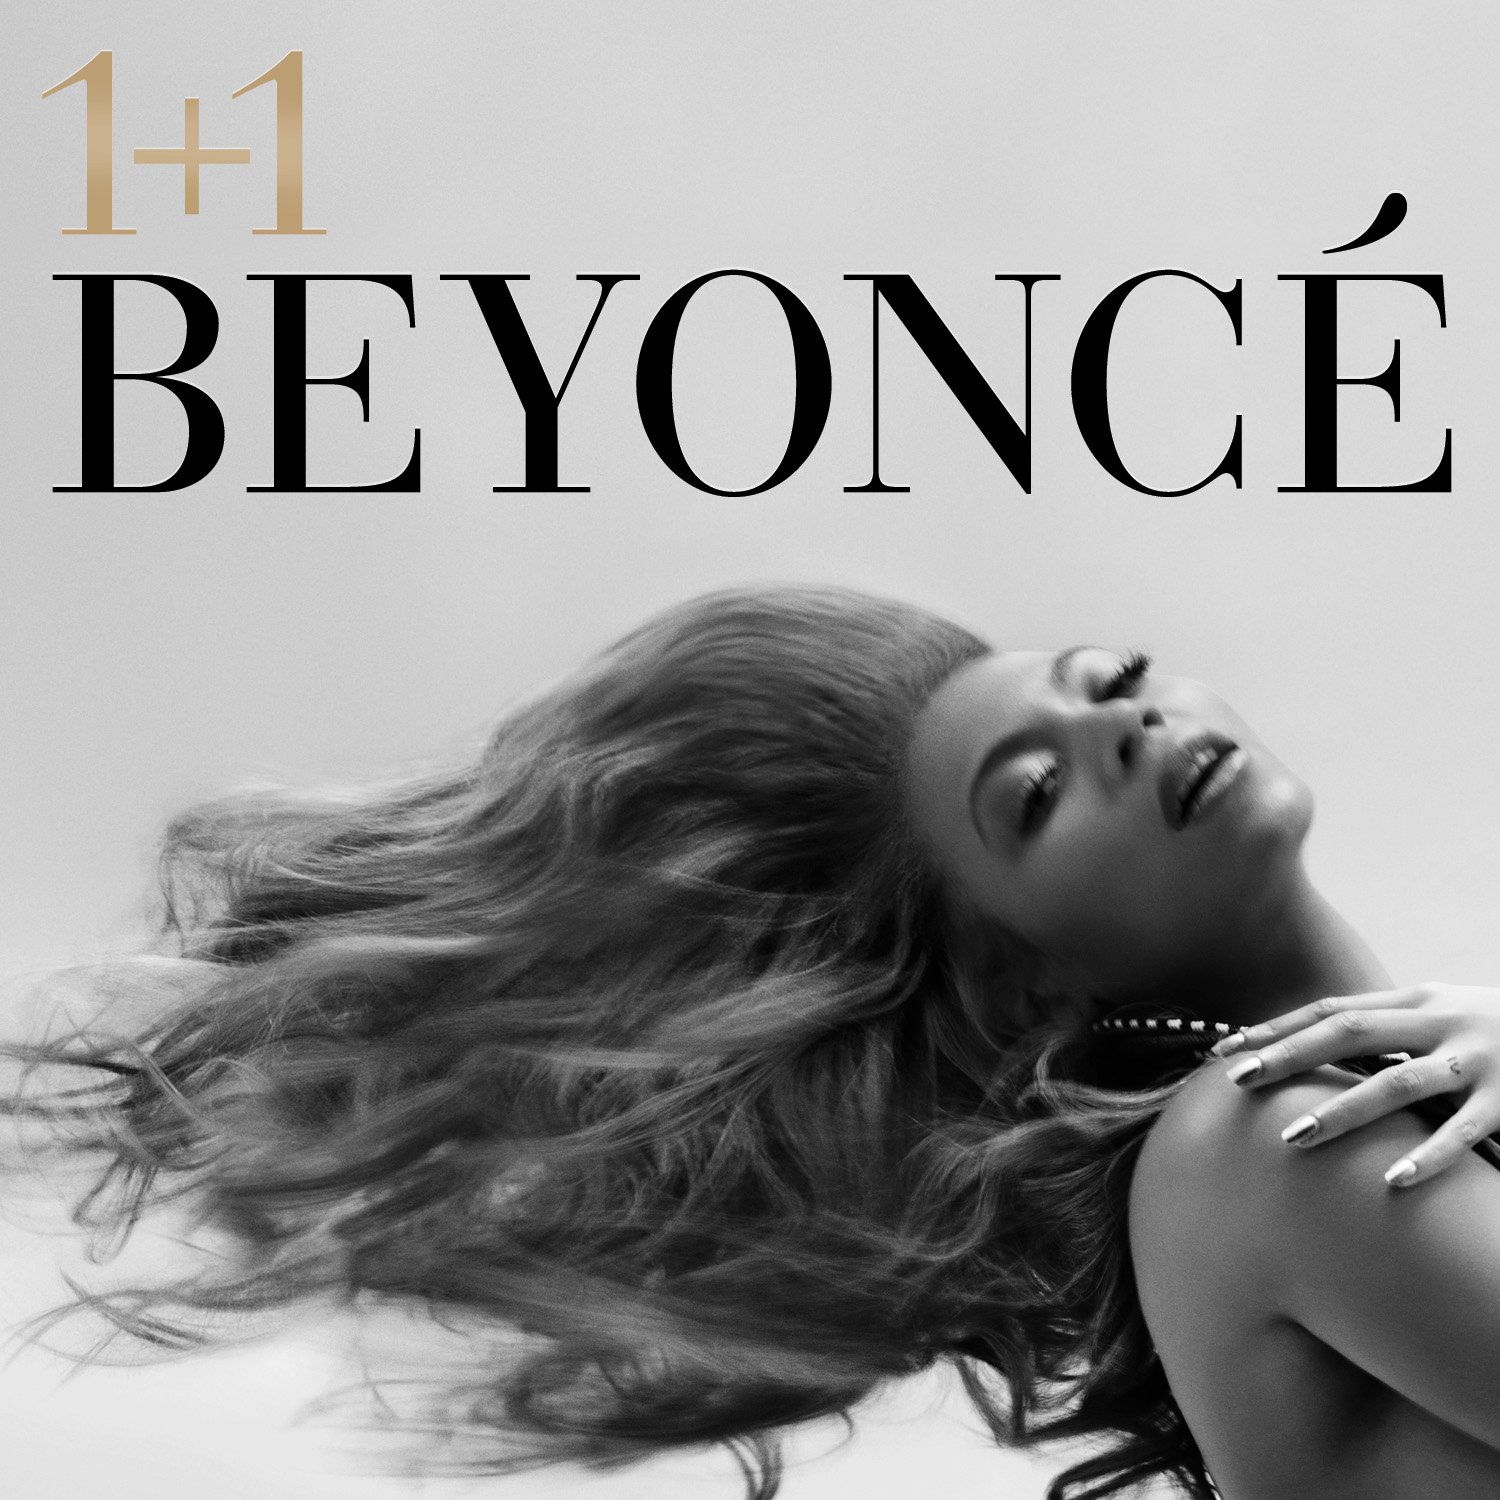 Beyonce Album Covers